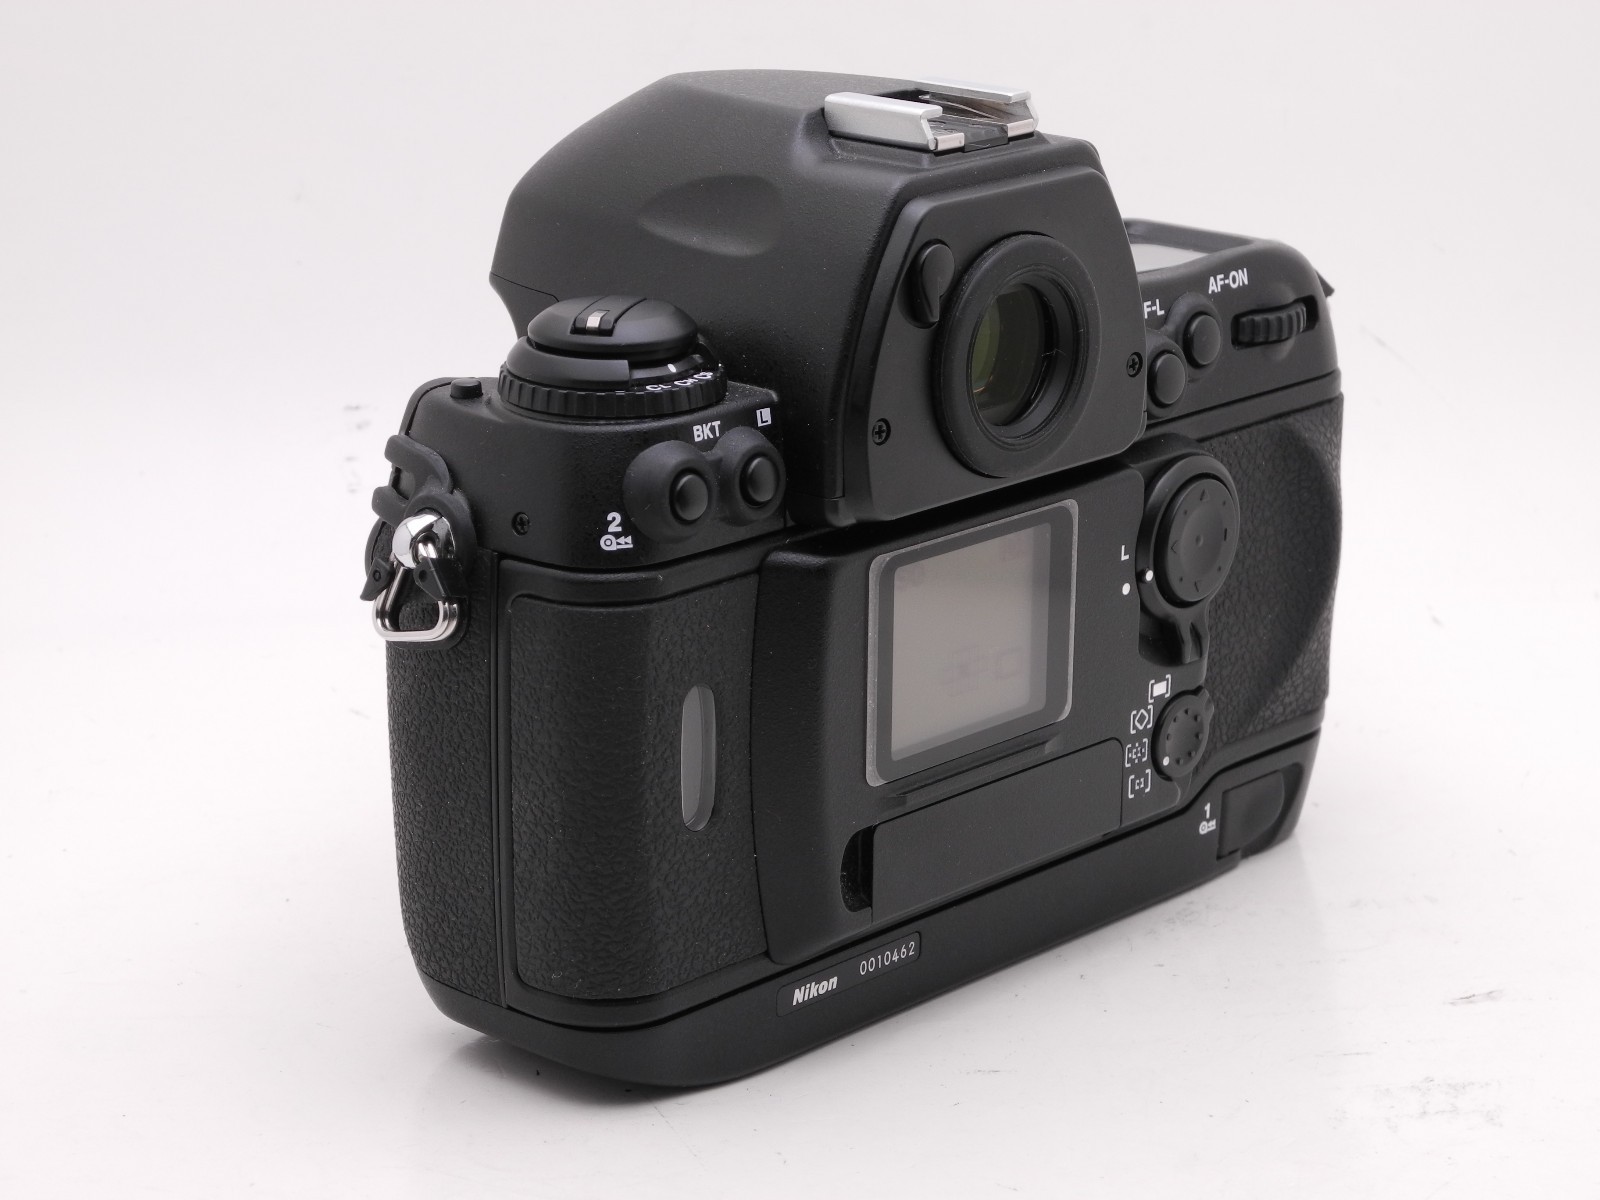 Nikon F6 Video SLR Camera Review